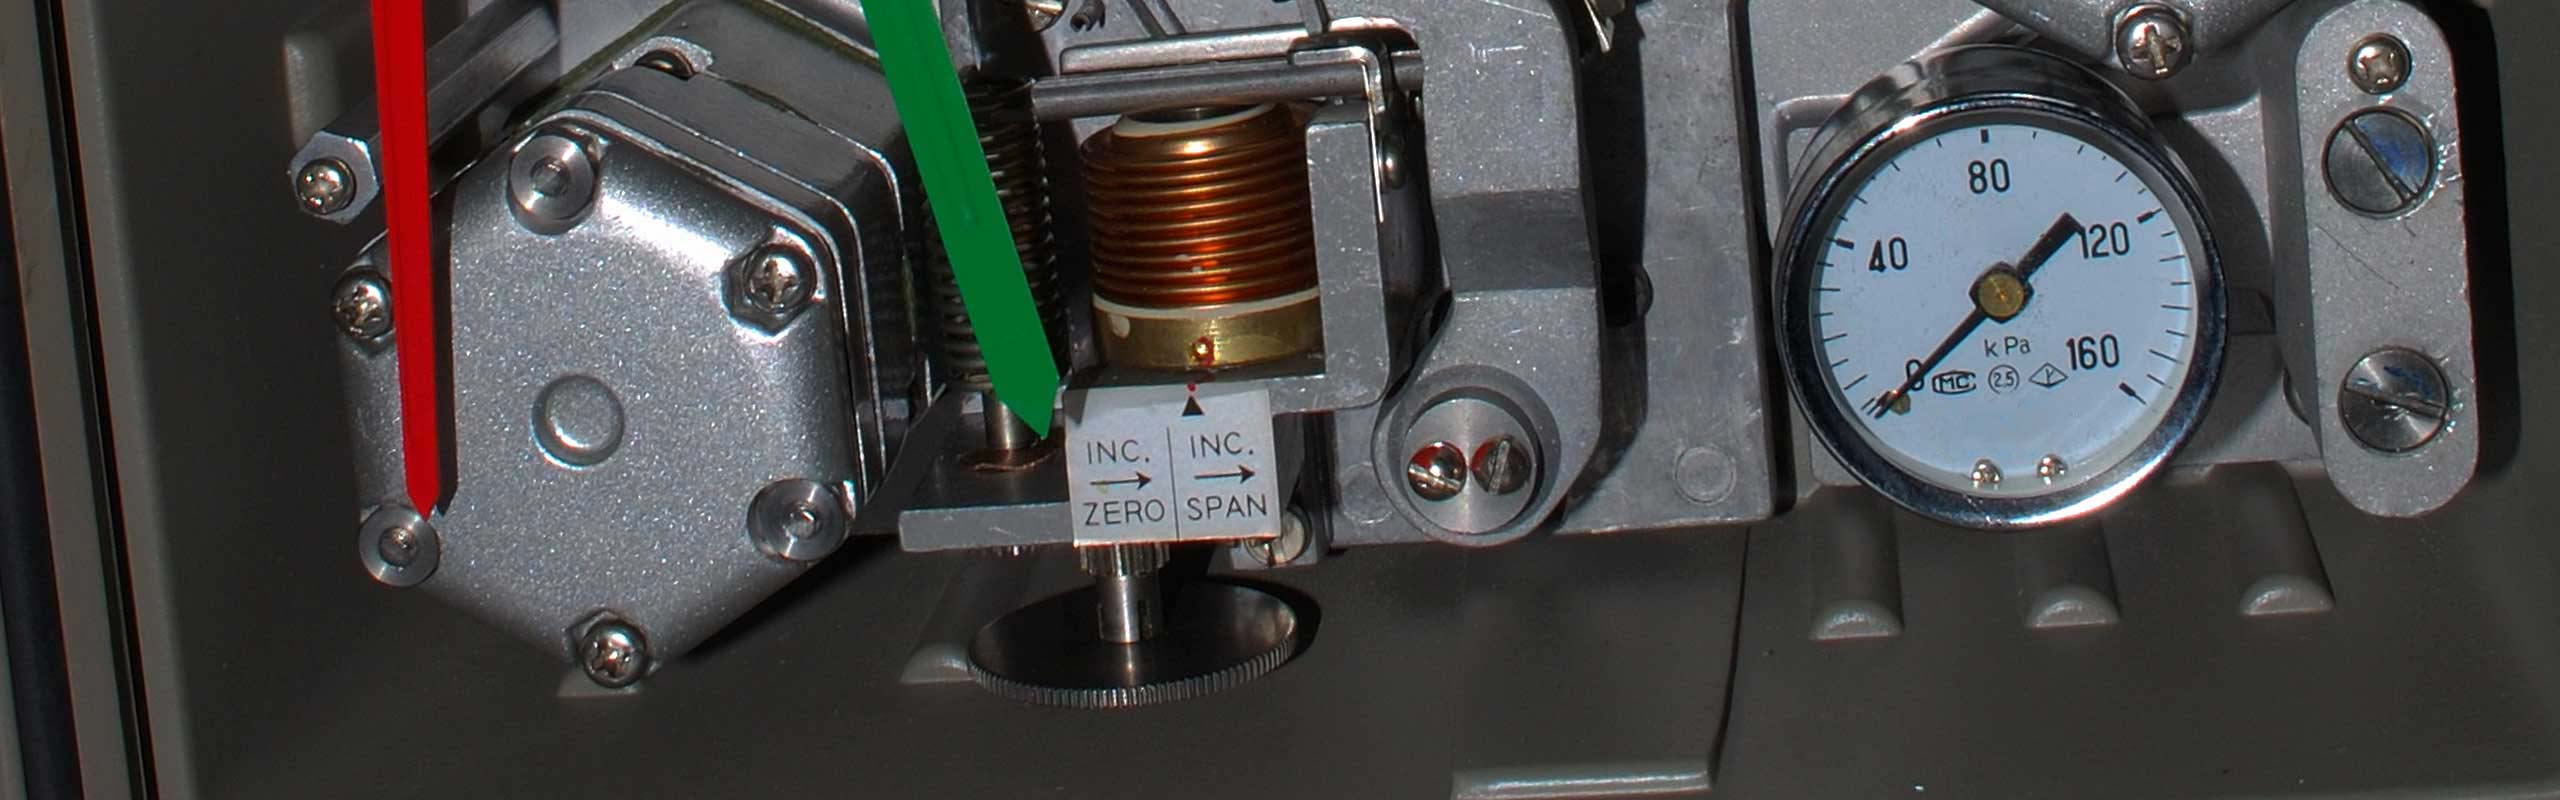 KDP 71/72 (Remote Seal Diaphragm) Pneumatic Differential Pressure Transmitter